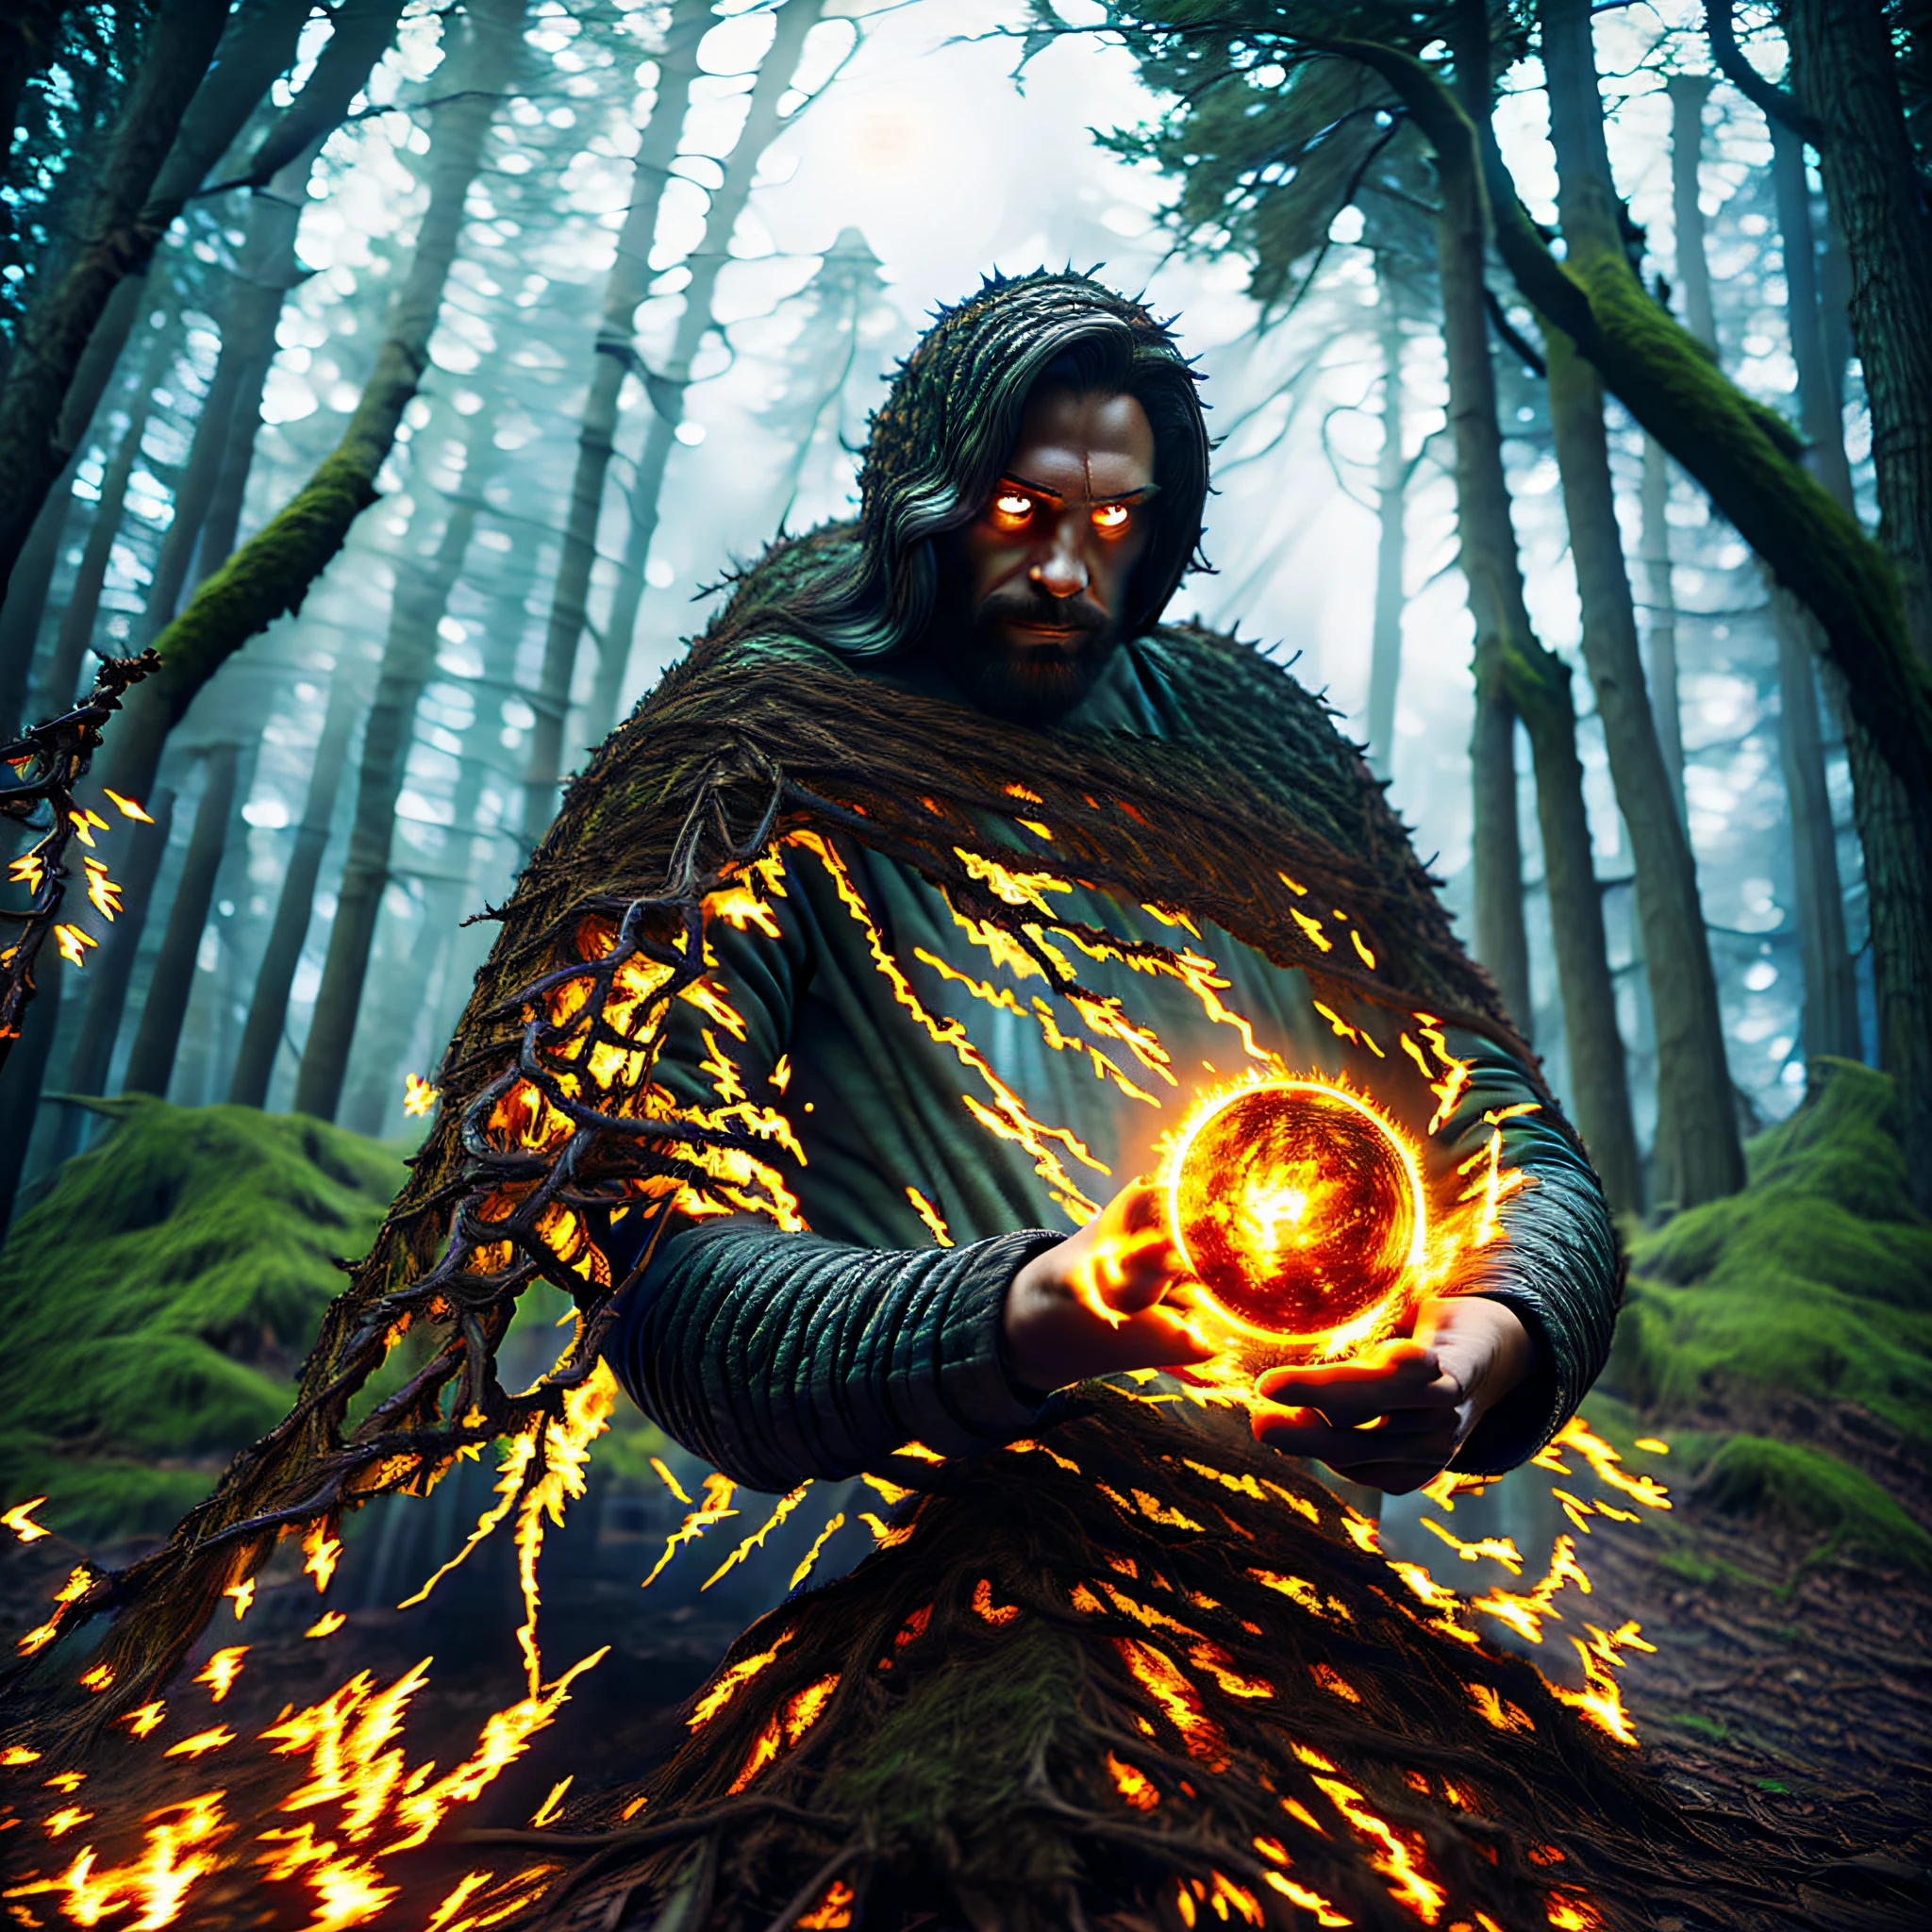 mago, na floresta escura, luar, bola de fogo nas mãos, 5 elementos